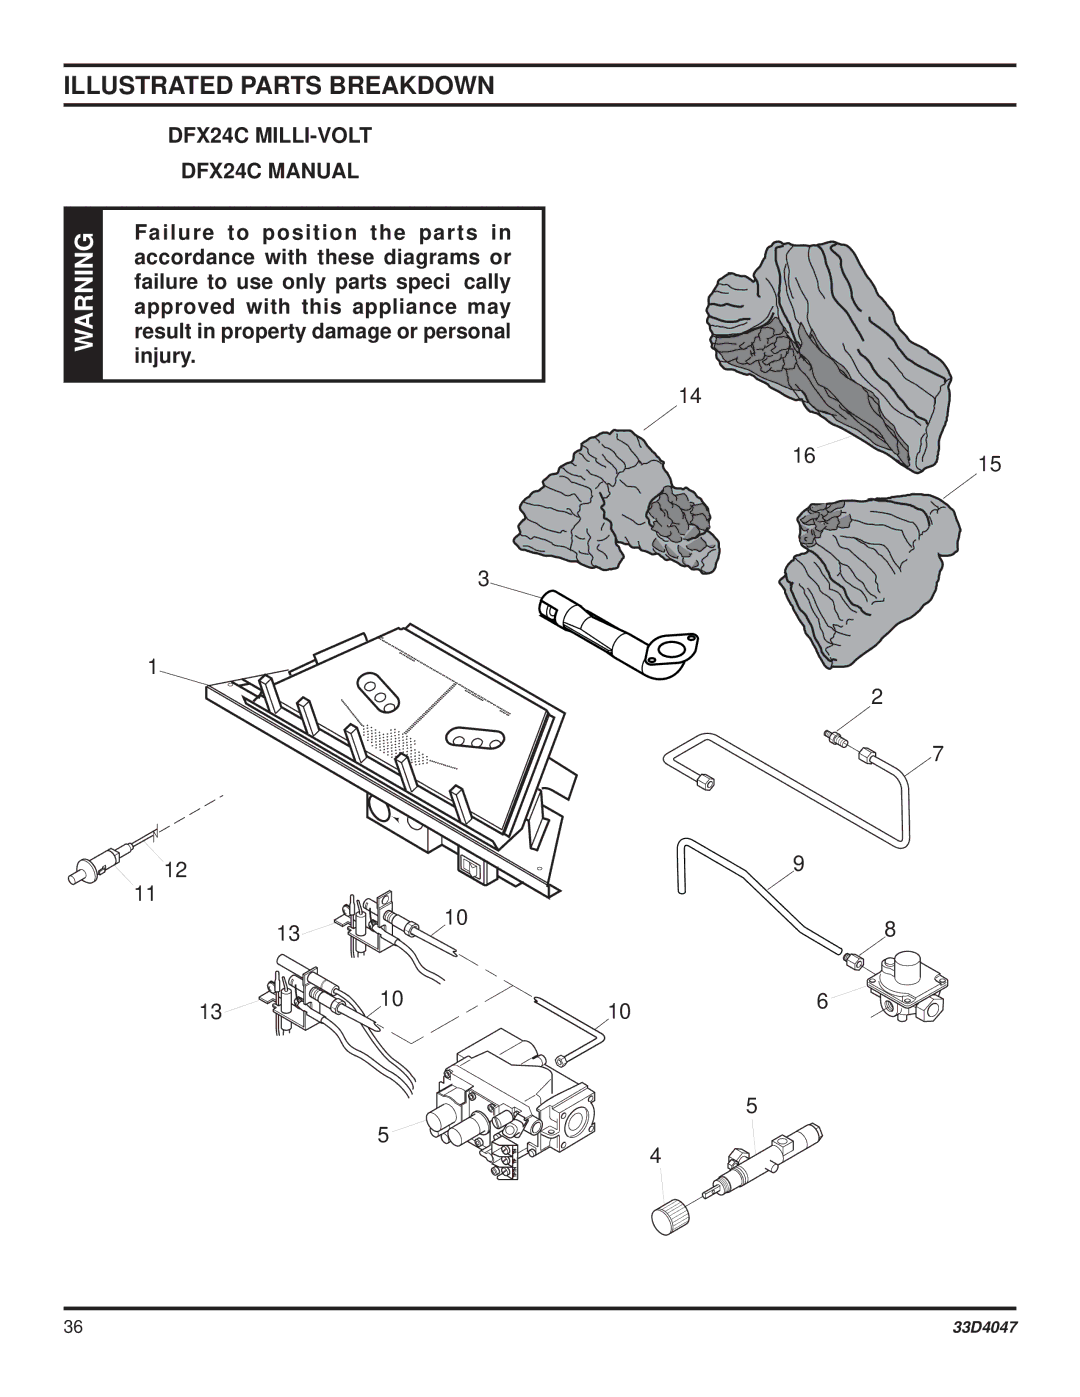 Monessen Hearth DBX24C* manual Illustrated Parts Breakdown, DFX24C MILLI-VOLT DFX24C Manual 